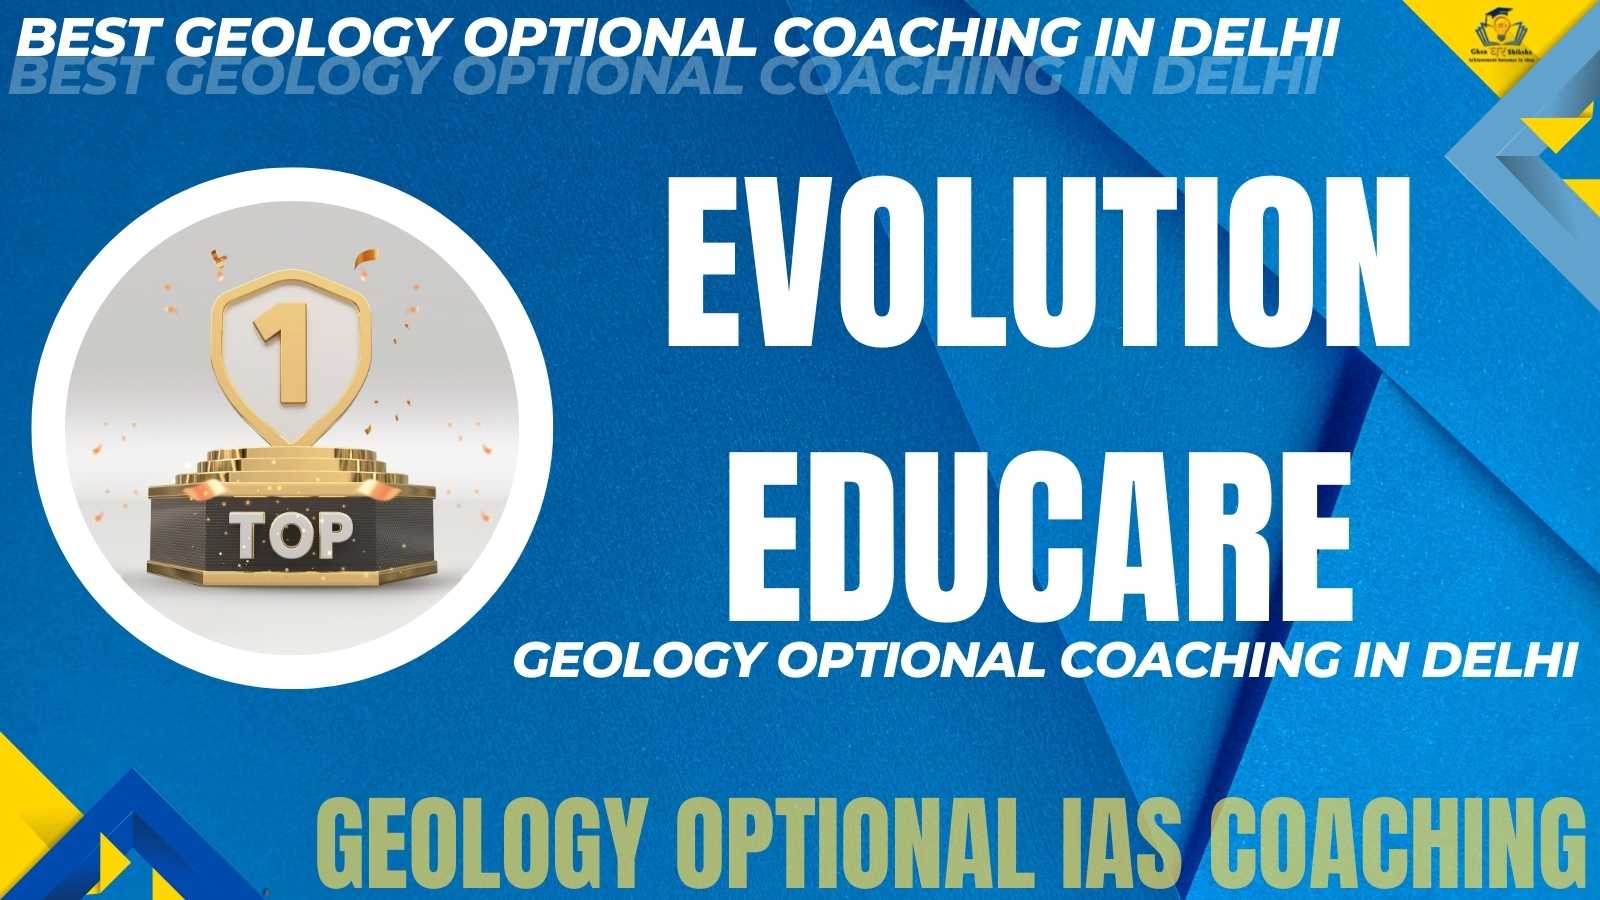 Top Geology Optional Coaching of Delhi